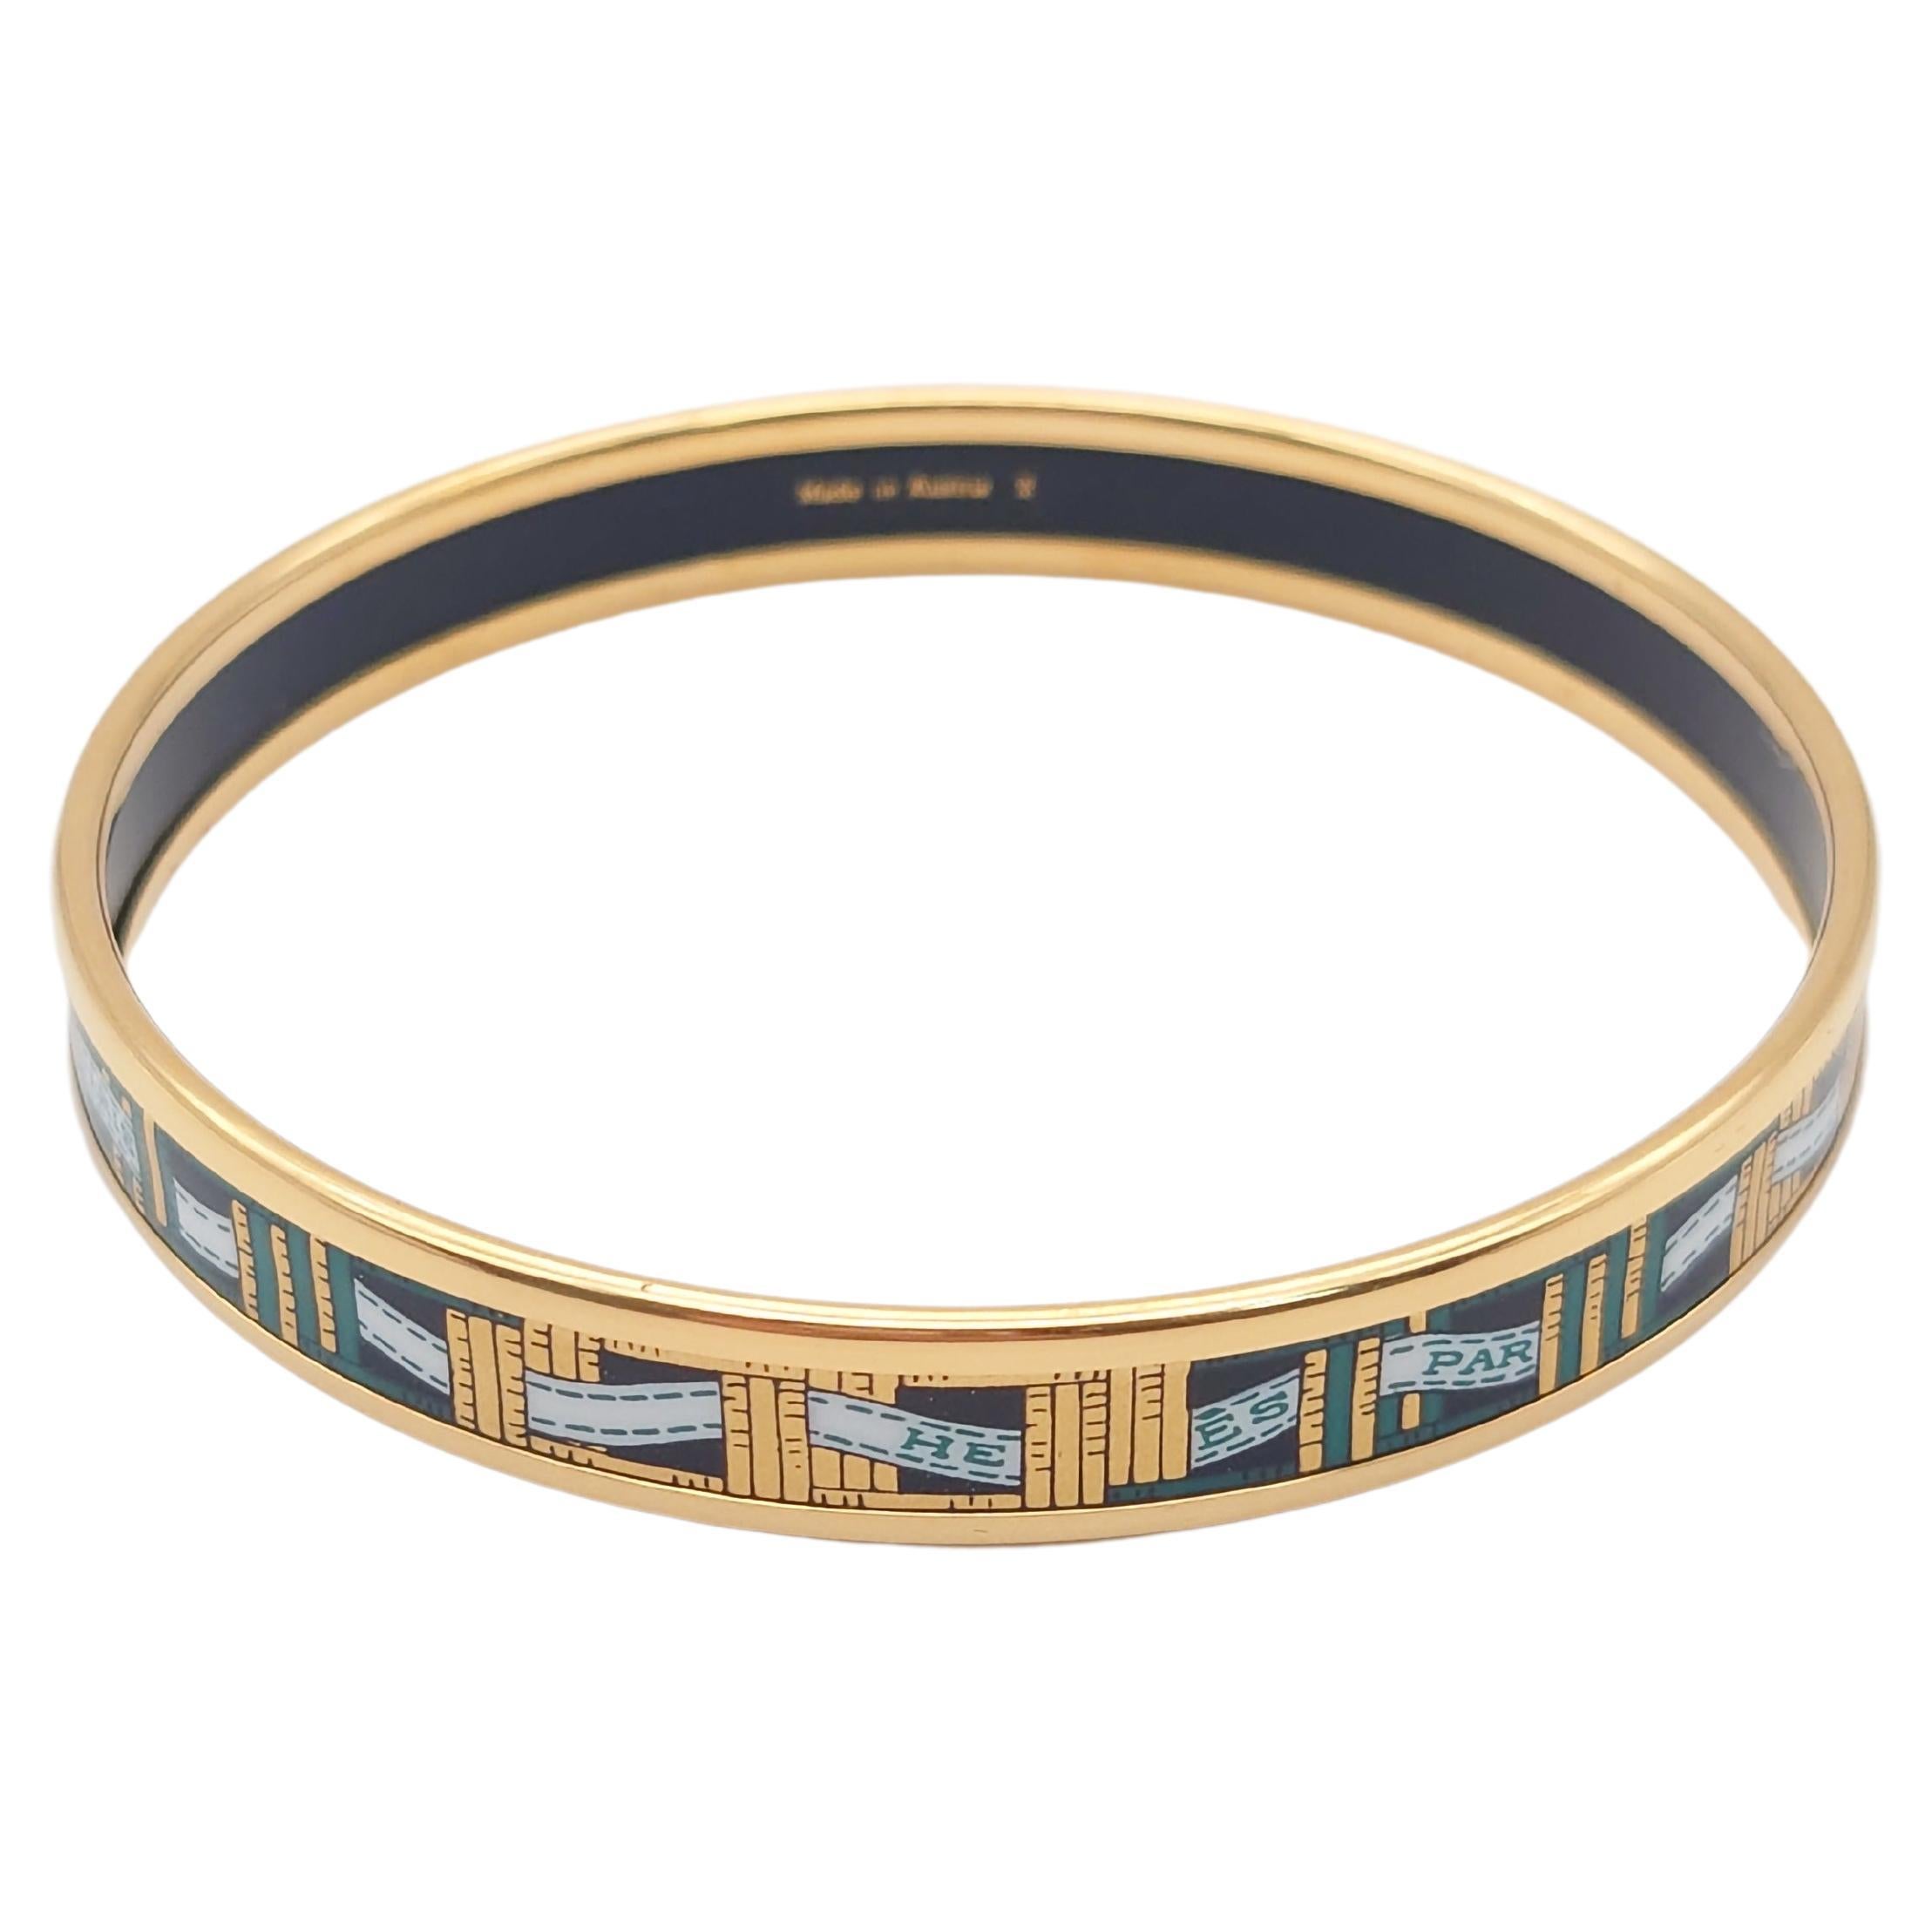 Authentic Hermes Bracelet Vintage Enamel Bangle ”Band”